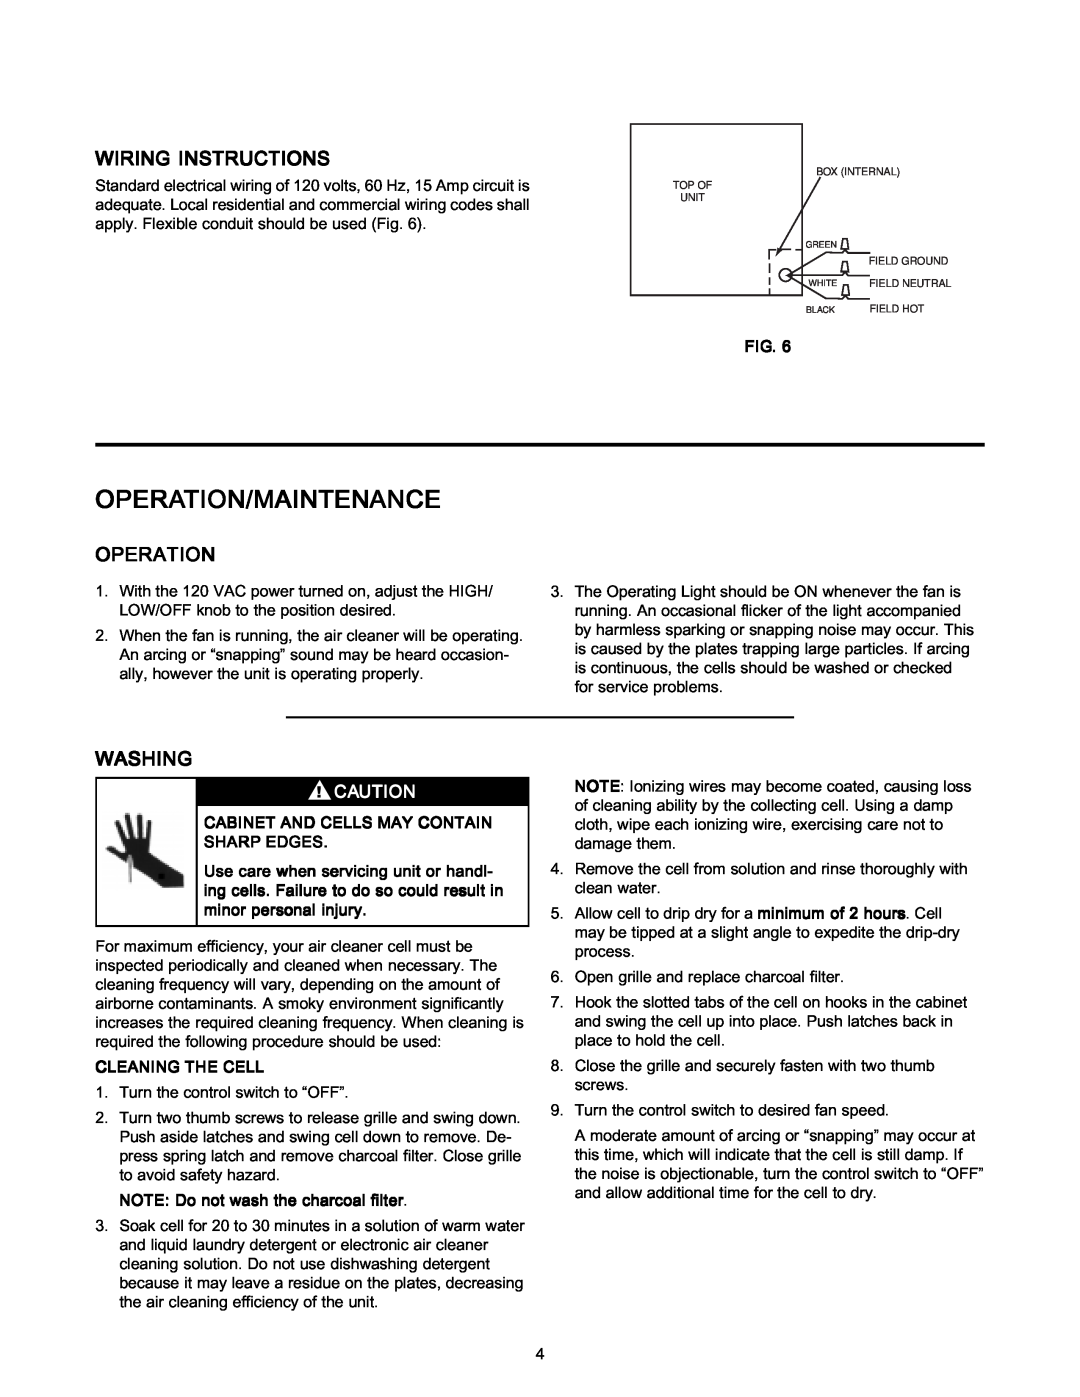 White Rodgers SSC1000 manual Operation/Maintenance, Wiring Instructions, Washing 